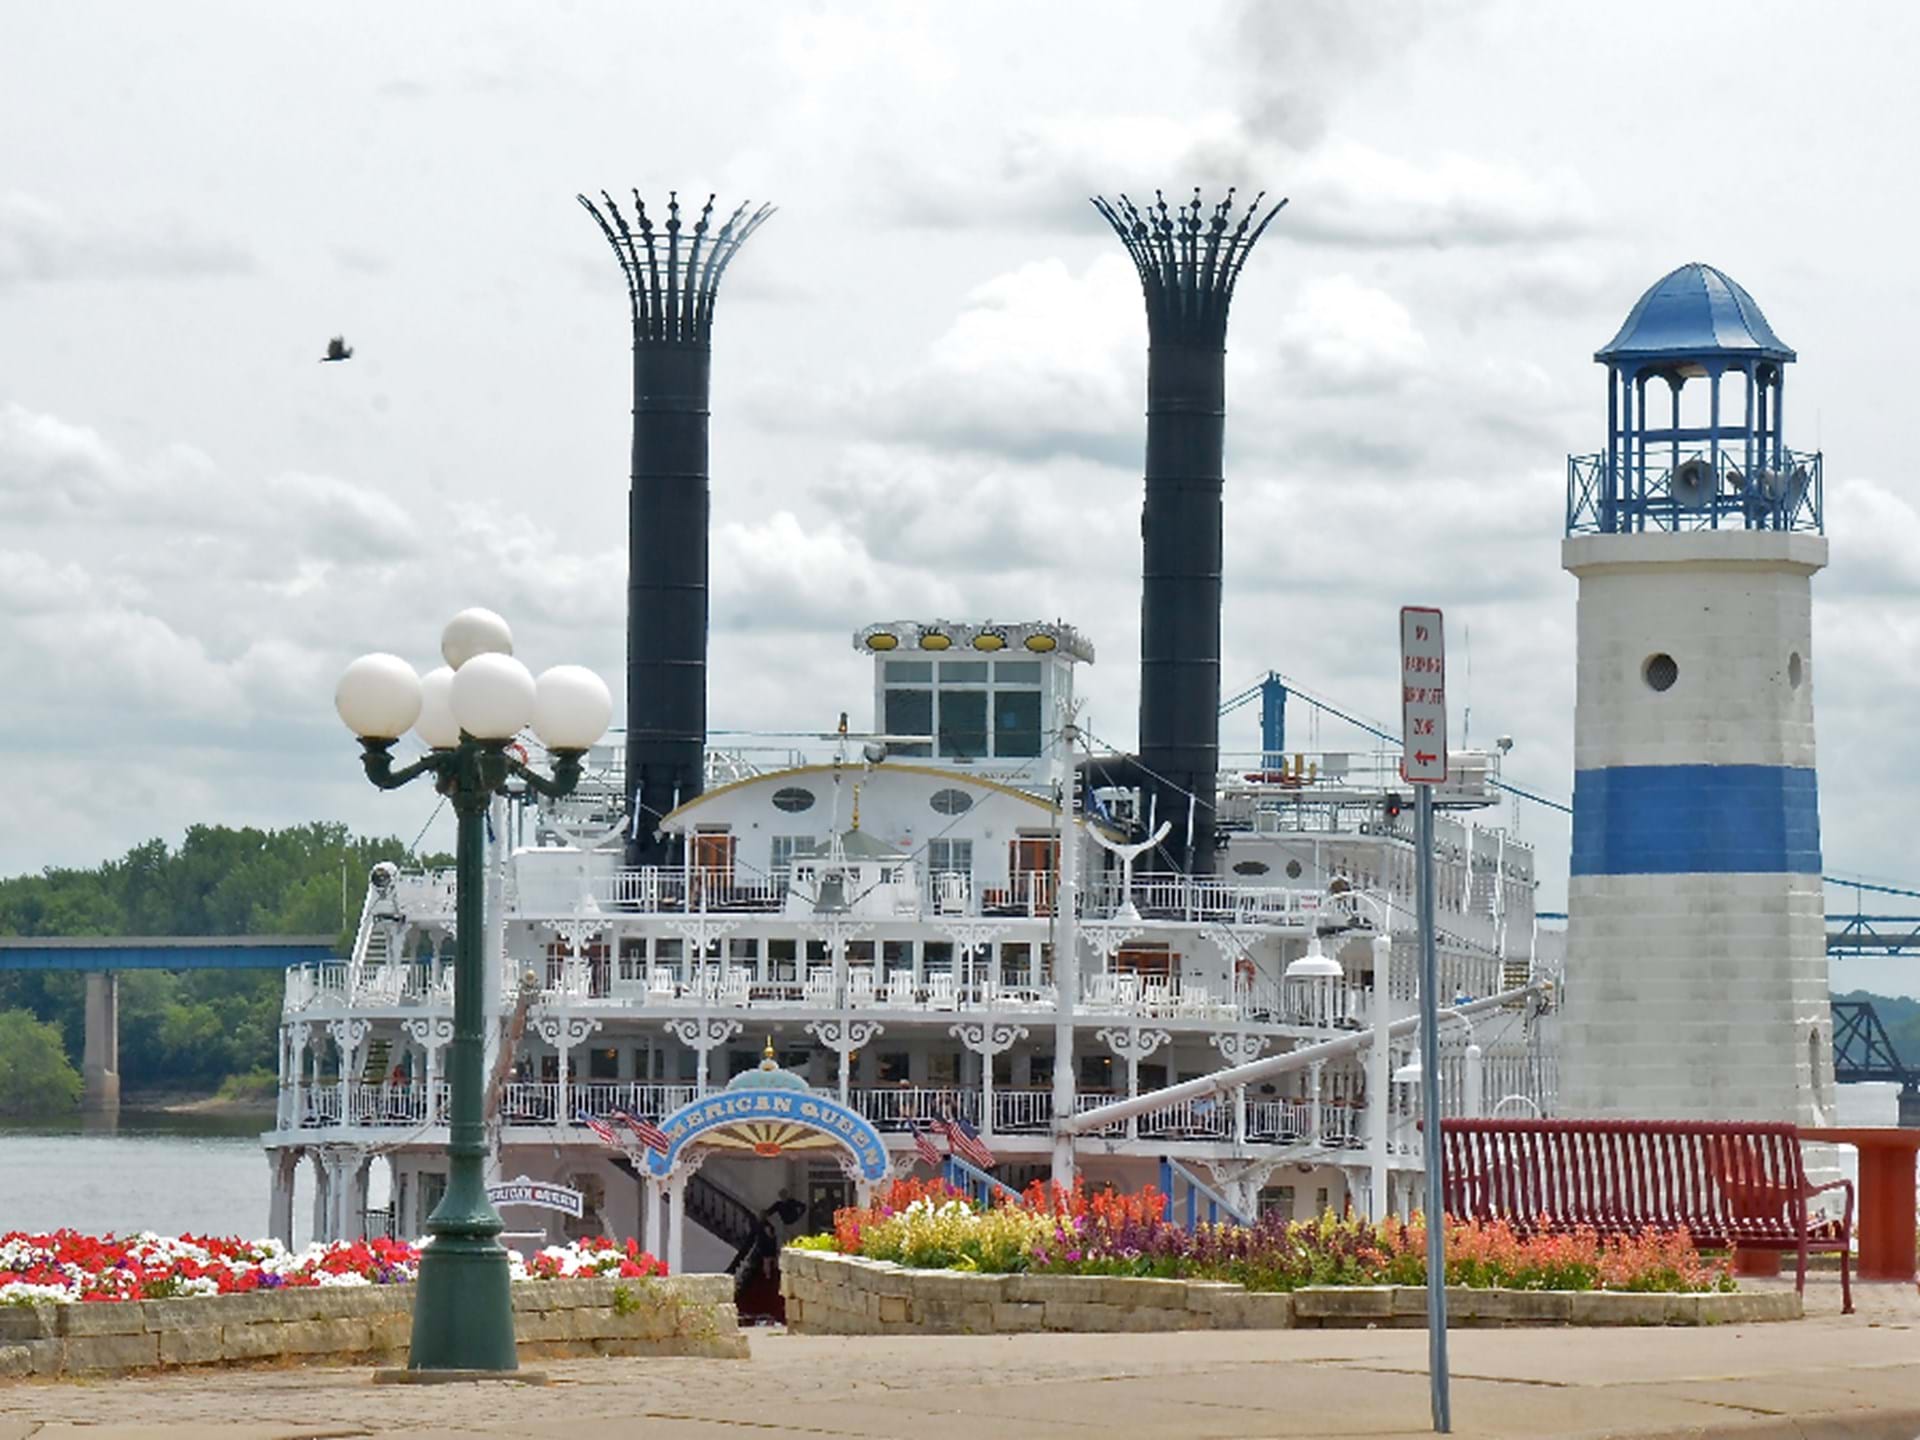 American Queen Steamboat docked in Clinton, Iowa